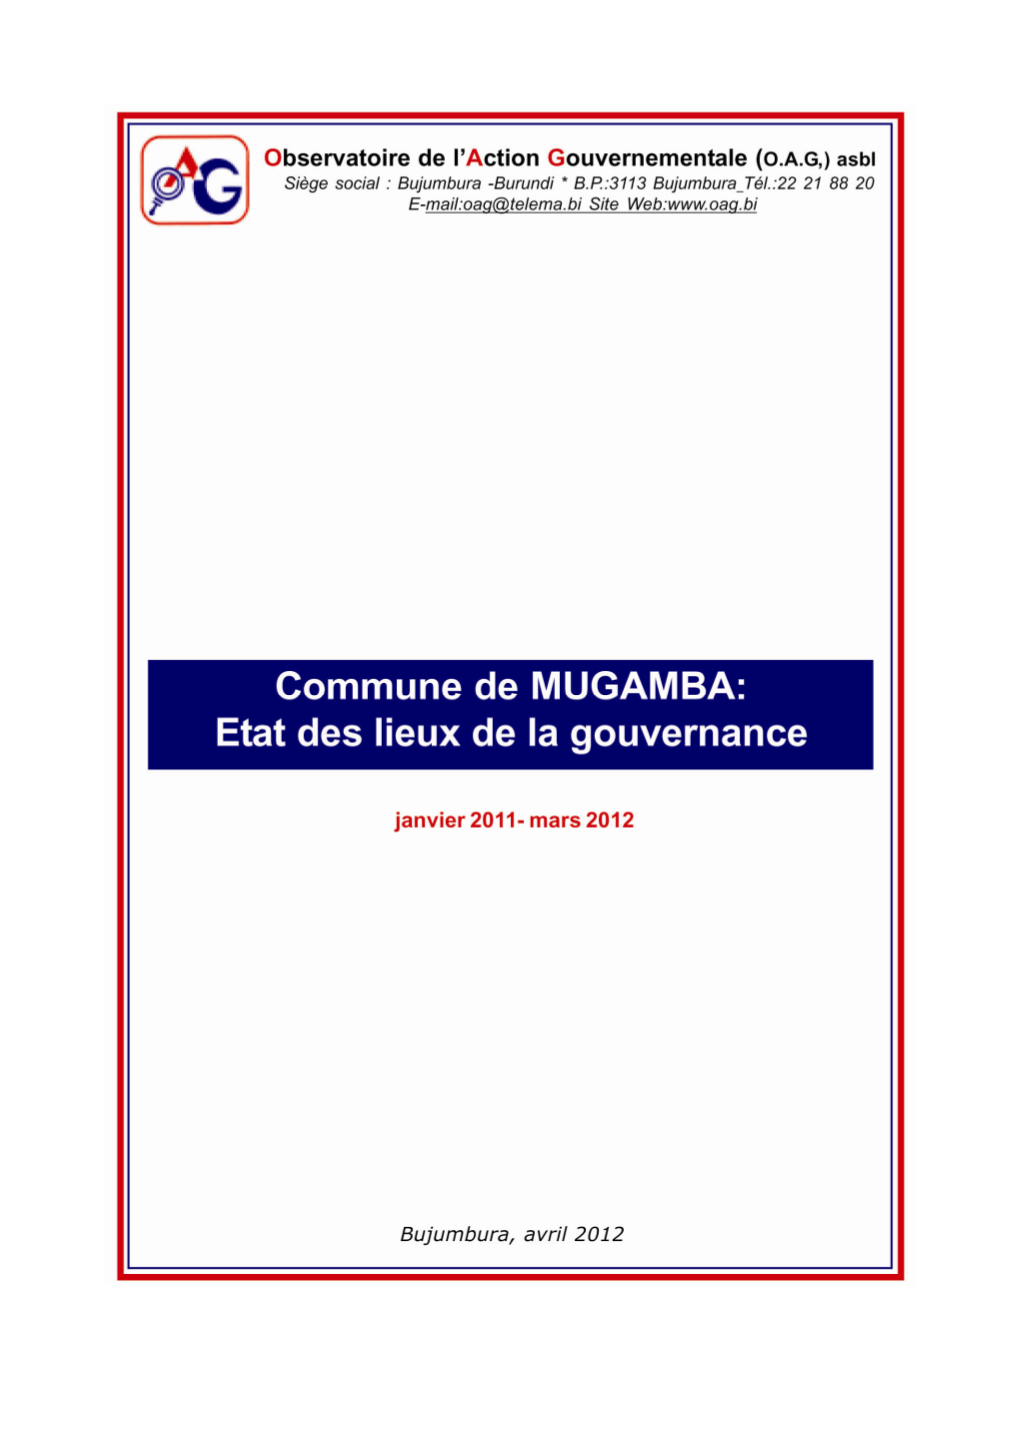 Rapport D'observation De La Gouvernance Mugamba, Document